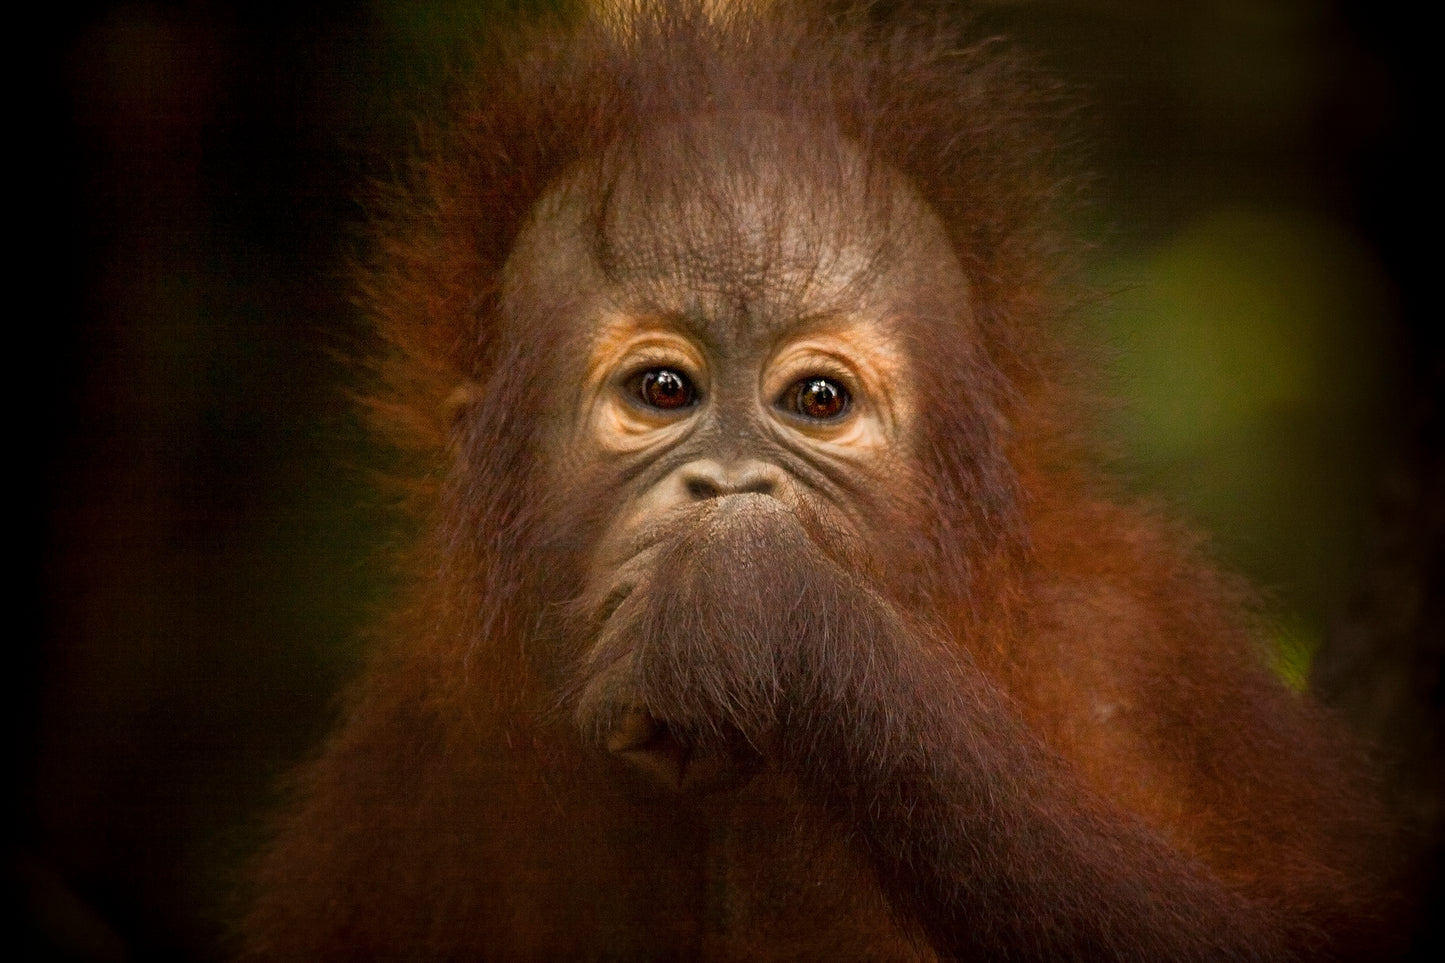 Orangutan Hand to Mouth